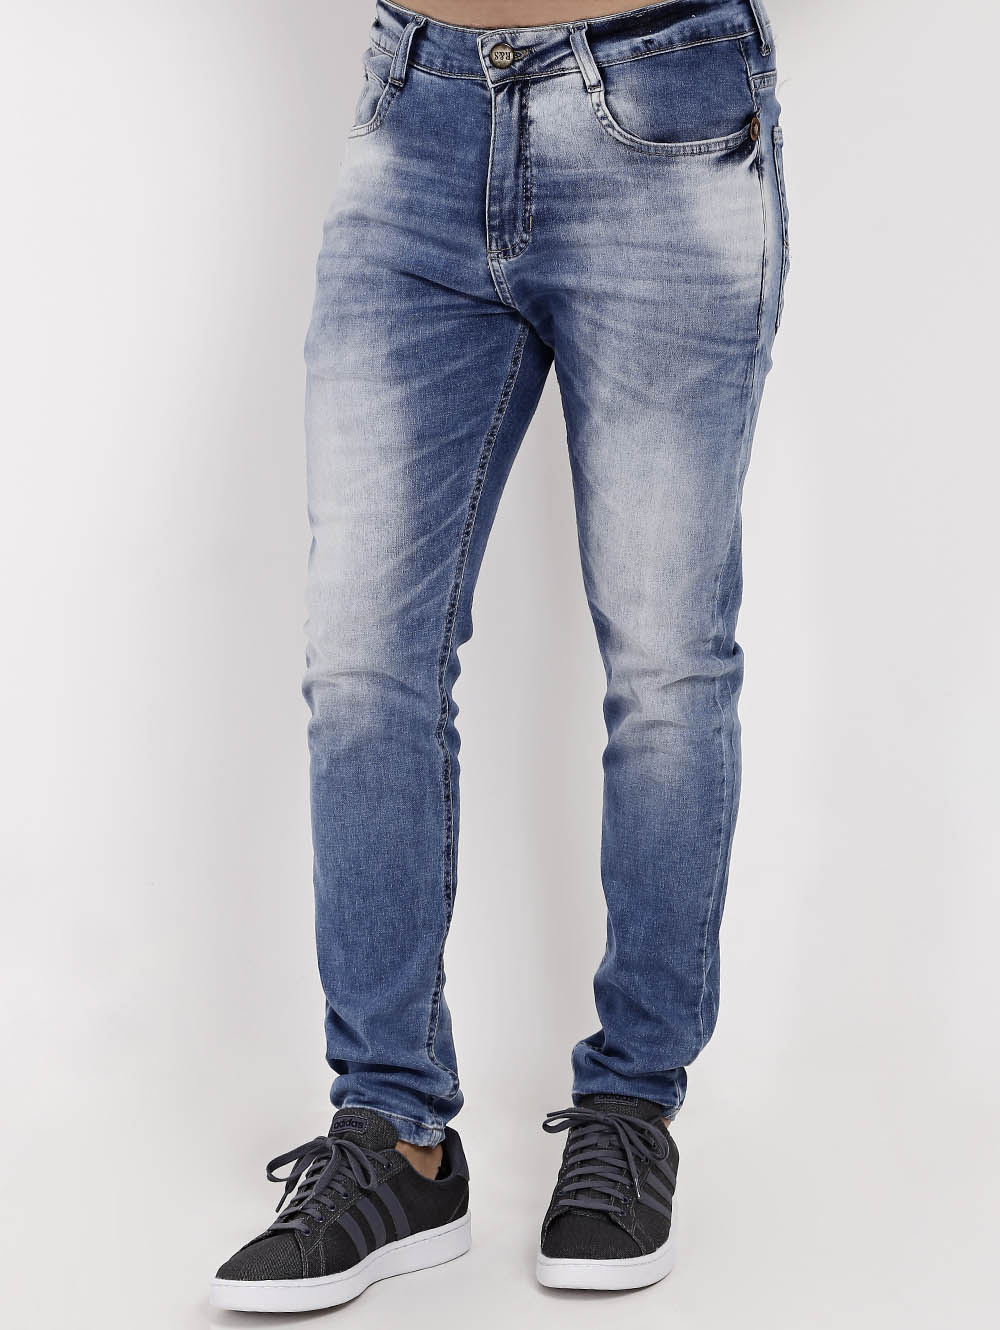 pompeia calça jeans